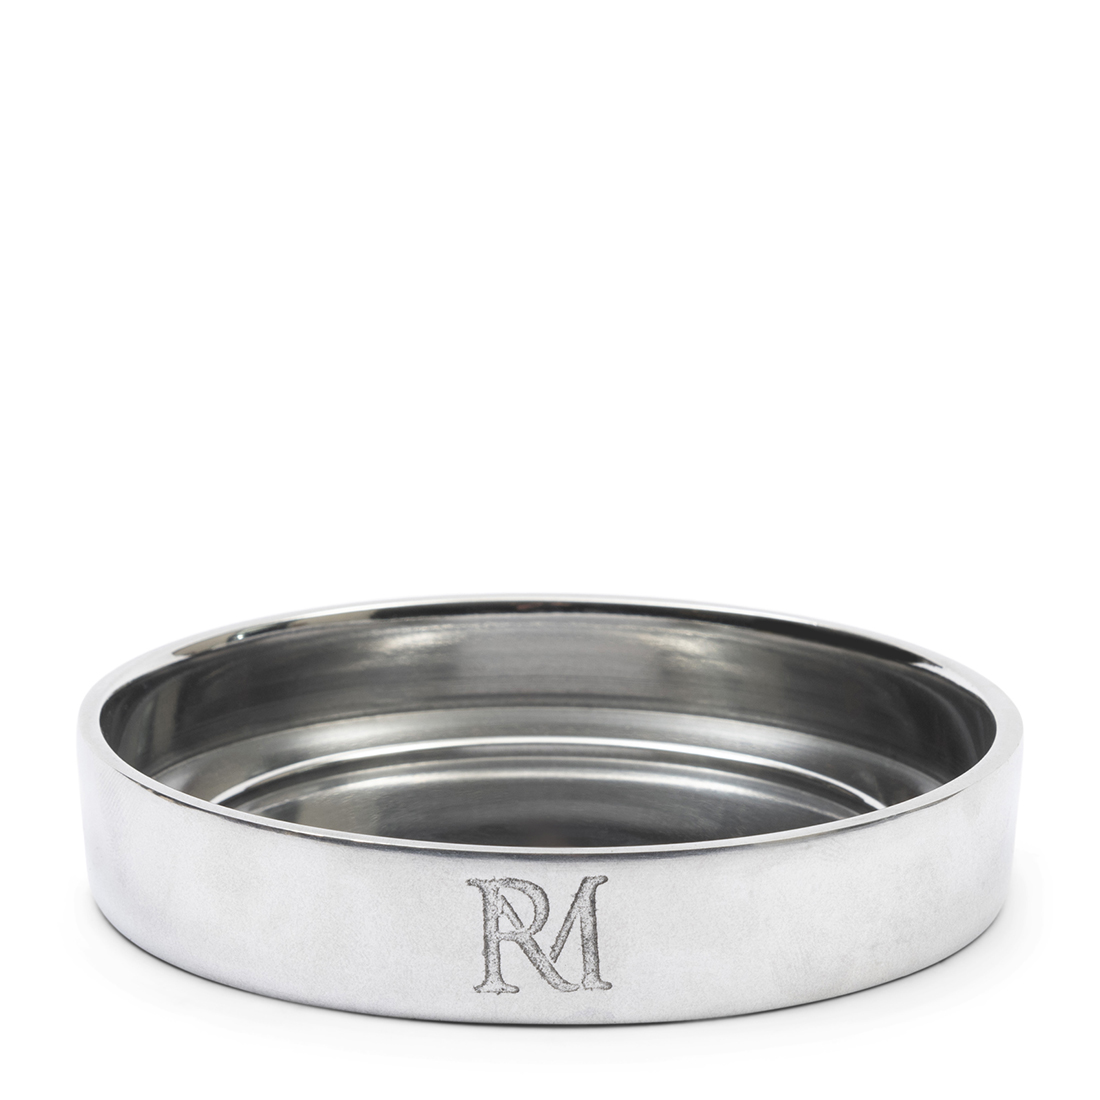 Riviera Maison Kaarsenhouder, Stompkaars, mini dienblad - RM Maxime Candle Platter - zilver